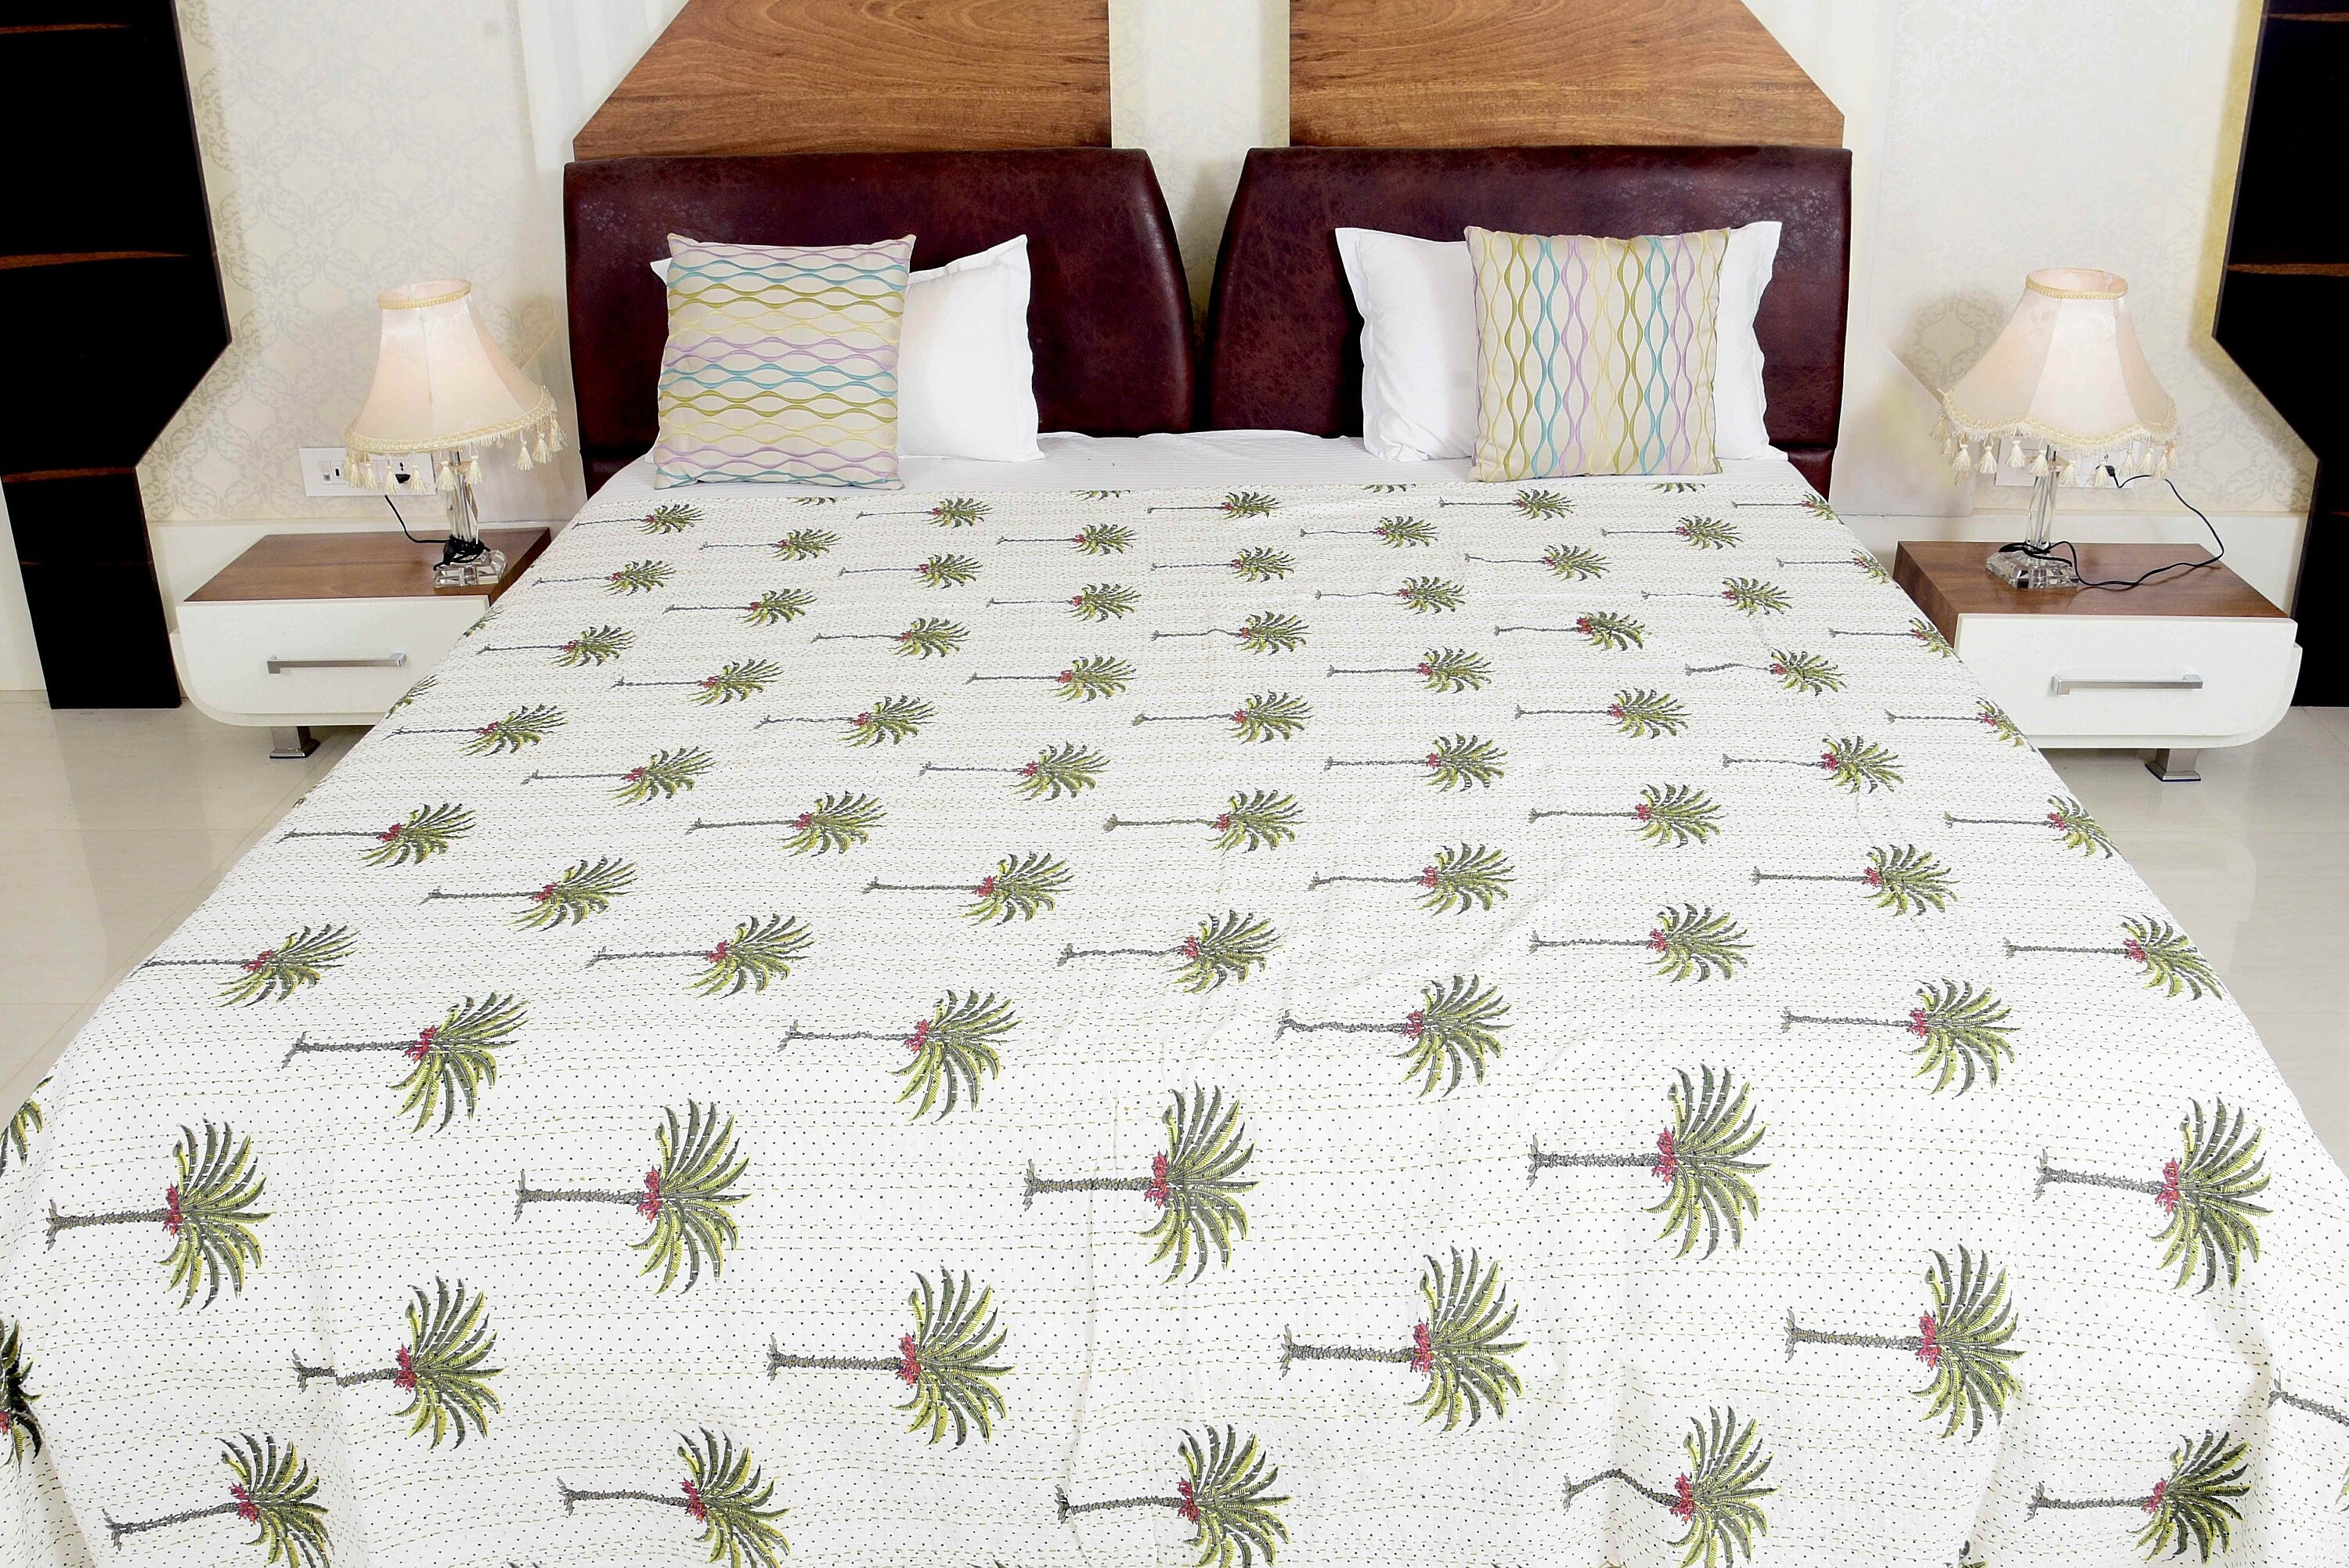 Indian Handmade Kantha Quilt Pineapple Print Bedspread Blanket Throw Cotton Gudr 